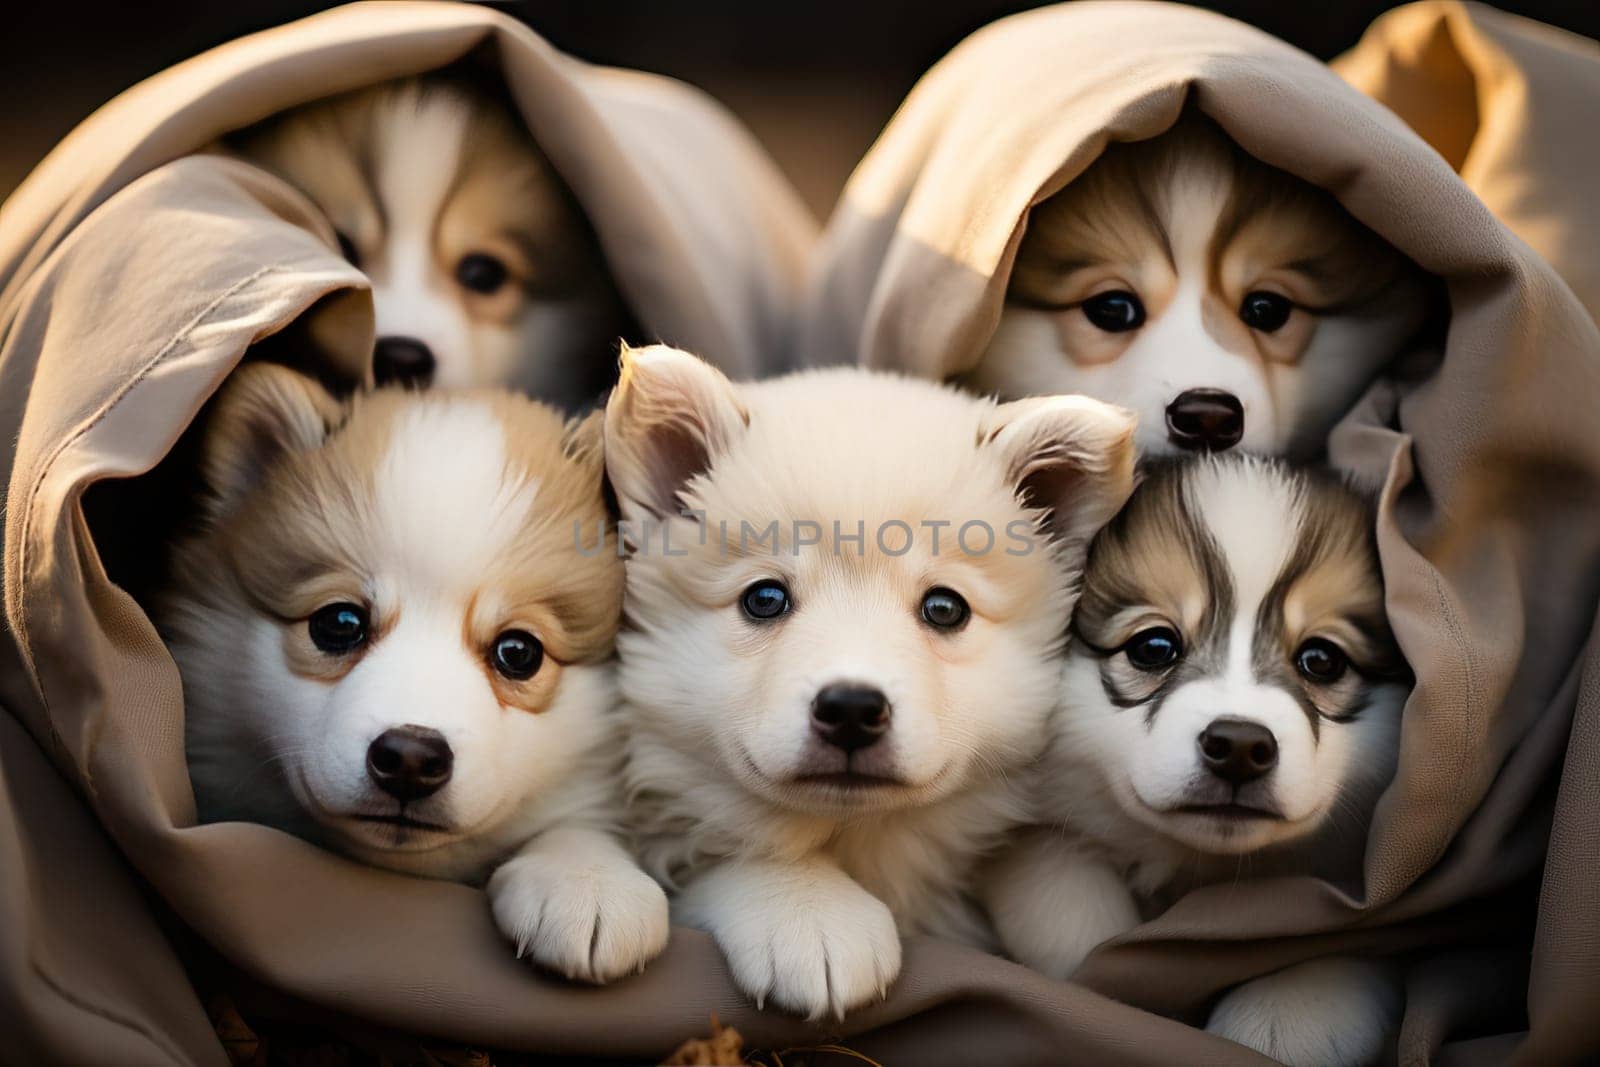 Little huskies wrapped in a blanket look ahead.